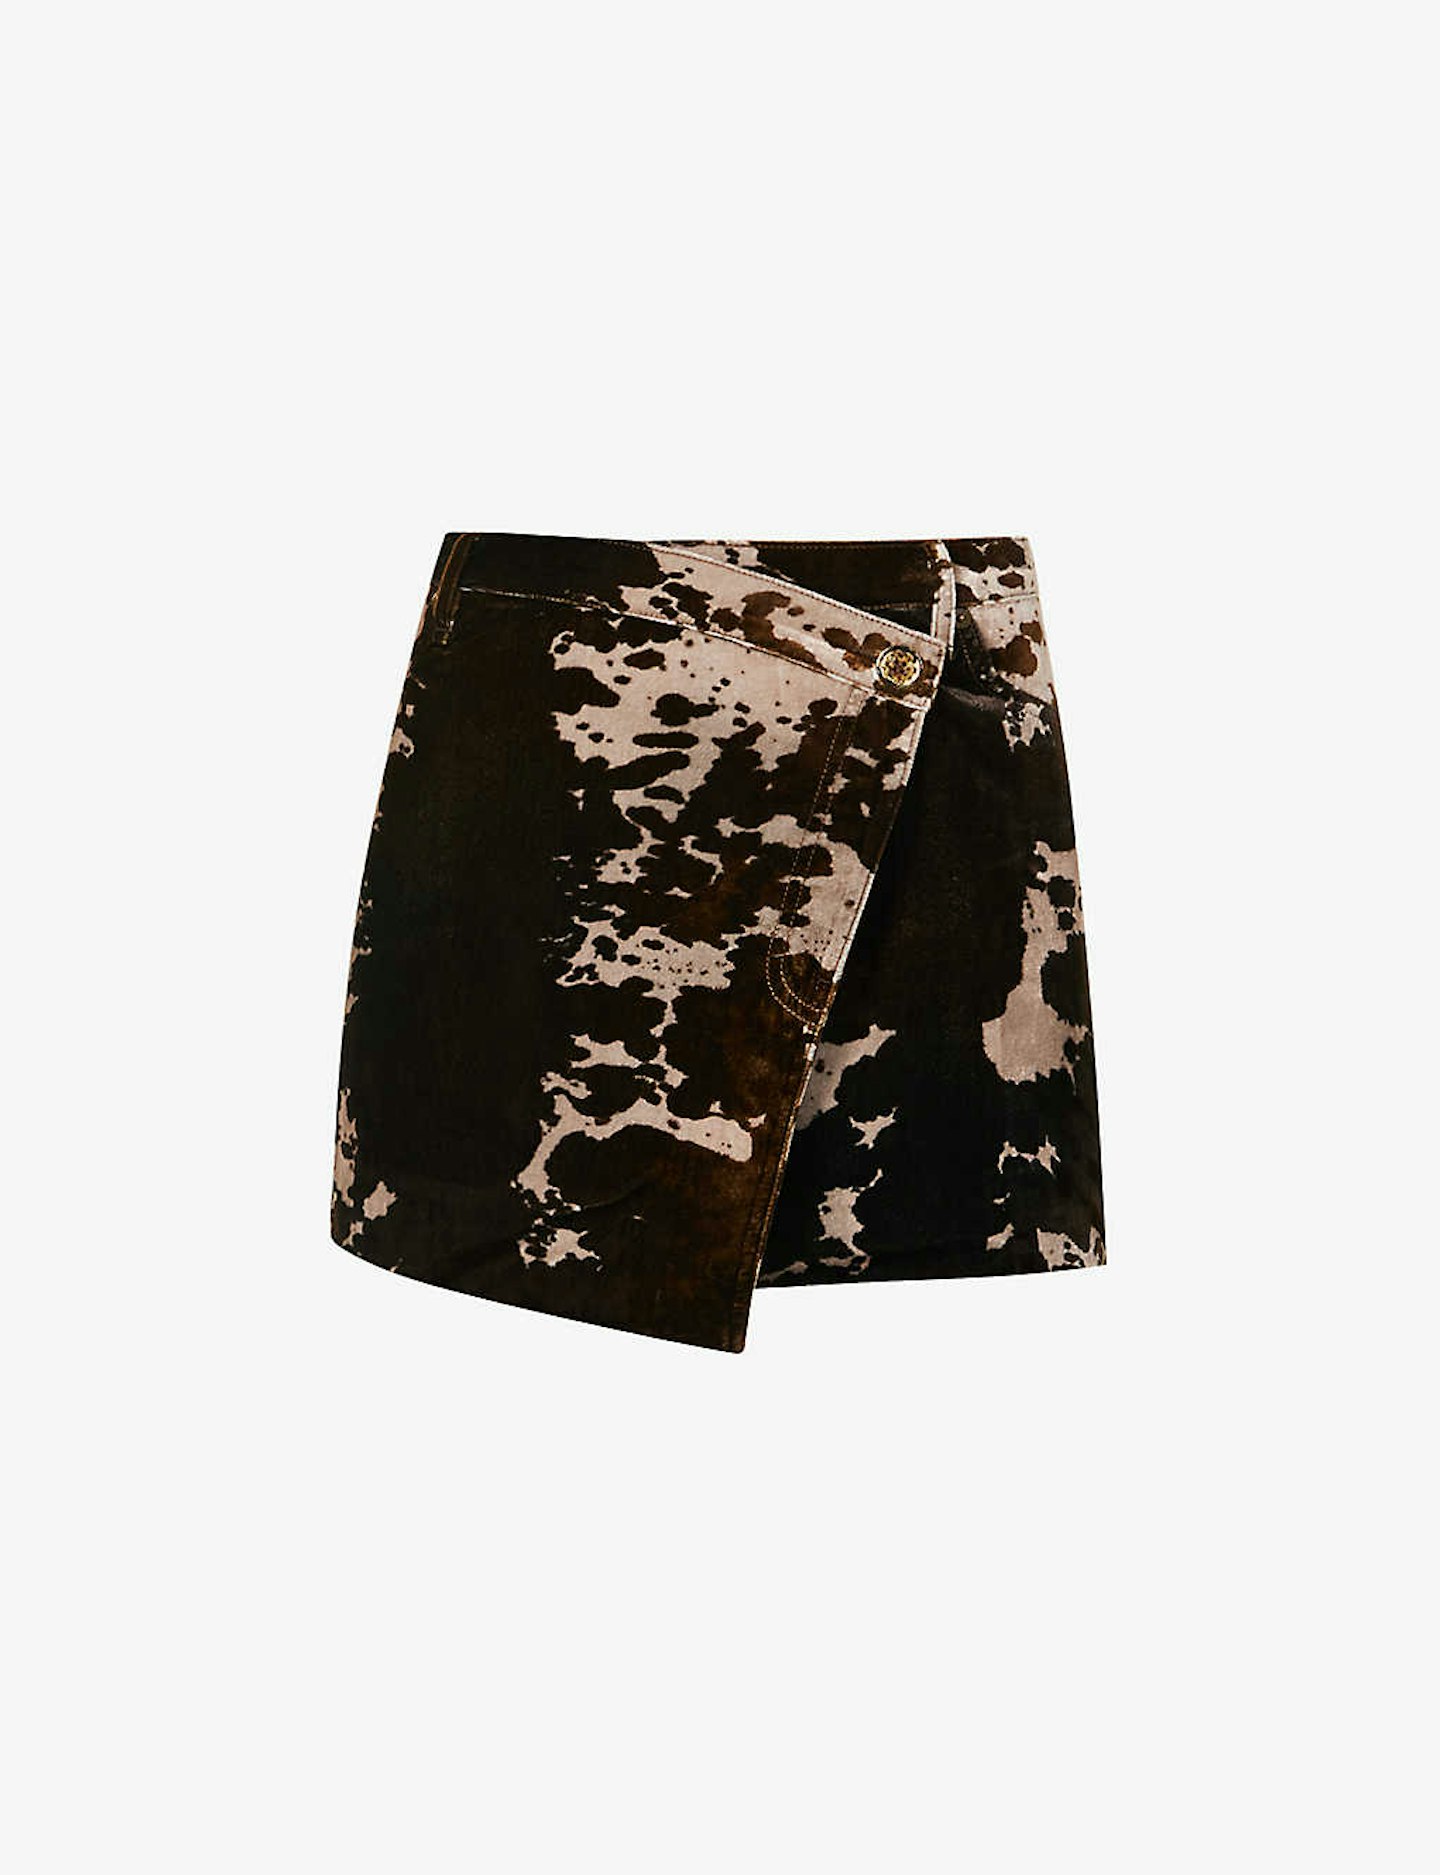 Acne Studios, Irinna Cow-Print Velour Mini Skirt